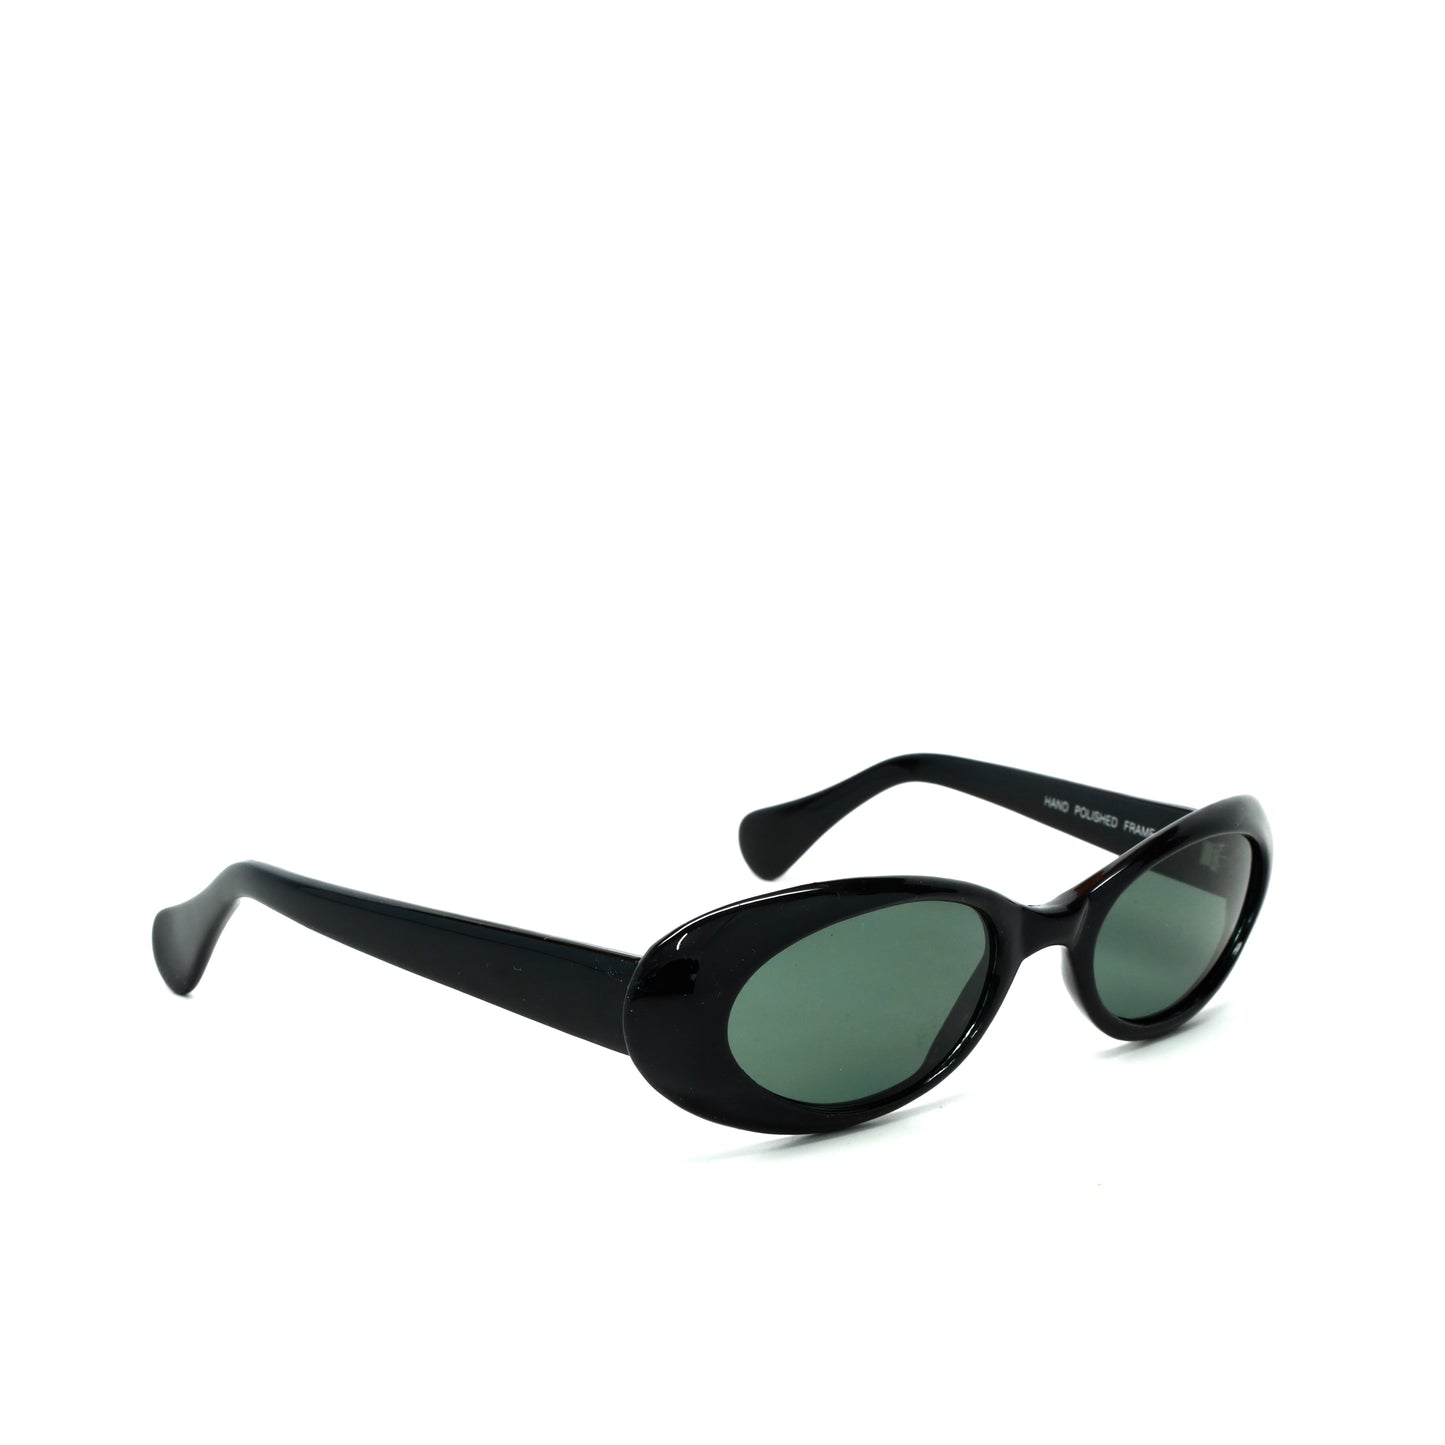 Vintage 90s Mod Original Oversized Jane Sunglasses - Black